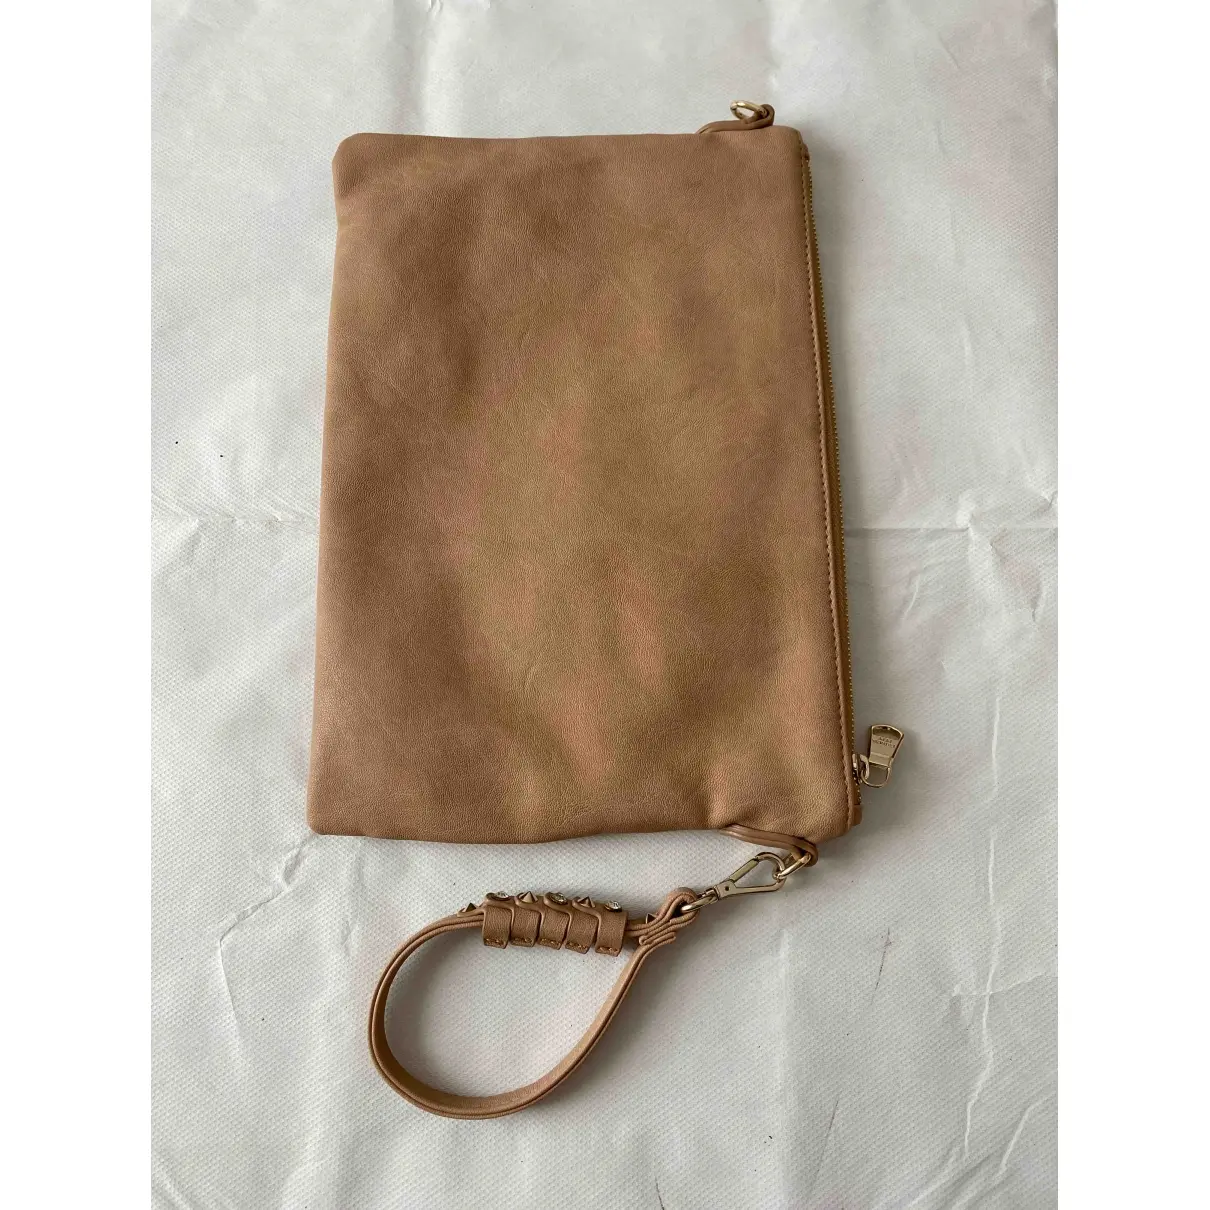 Buy Patrizia Pepe Leather clutch bag online